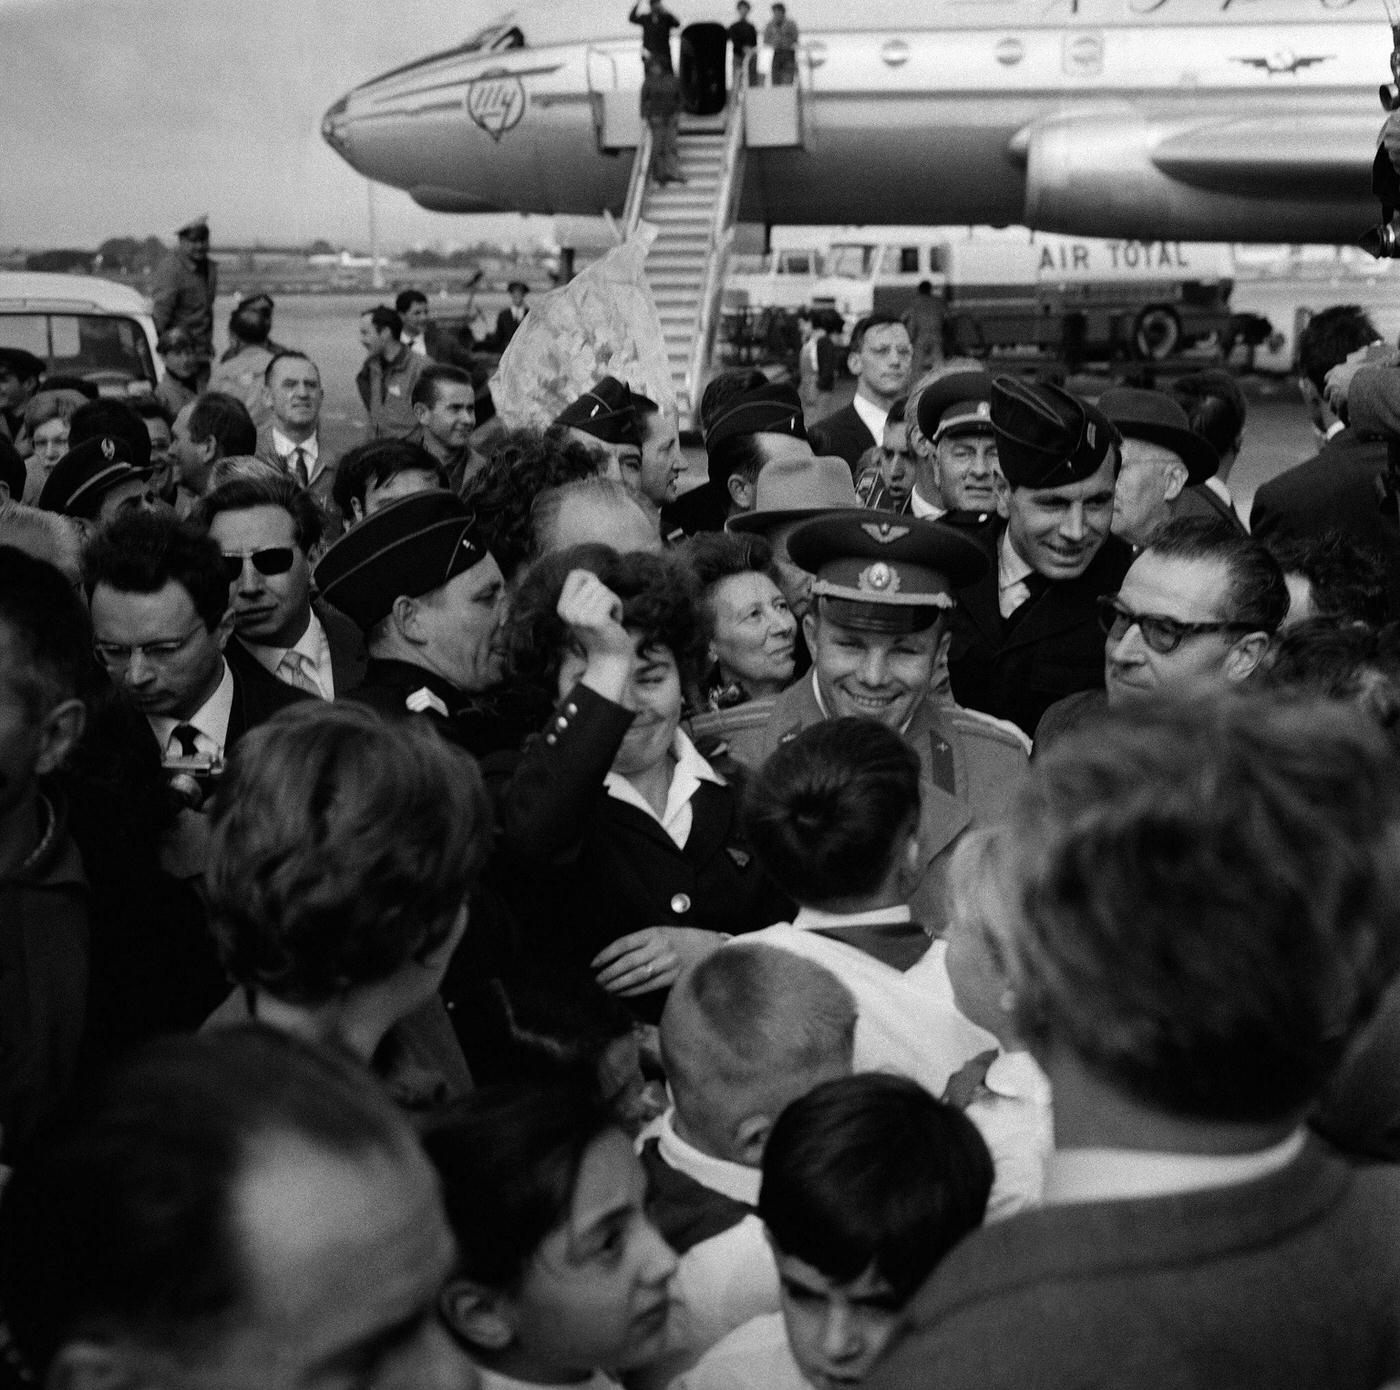 Arrival of Russian cosmonaut Yuri Gagarin at Le Bourget airport, 1963